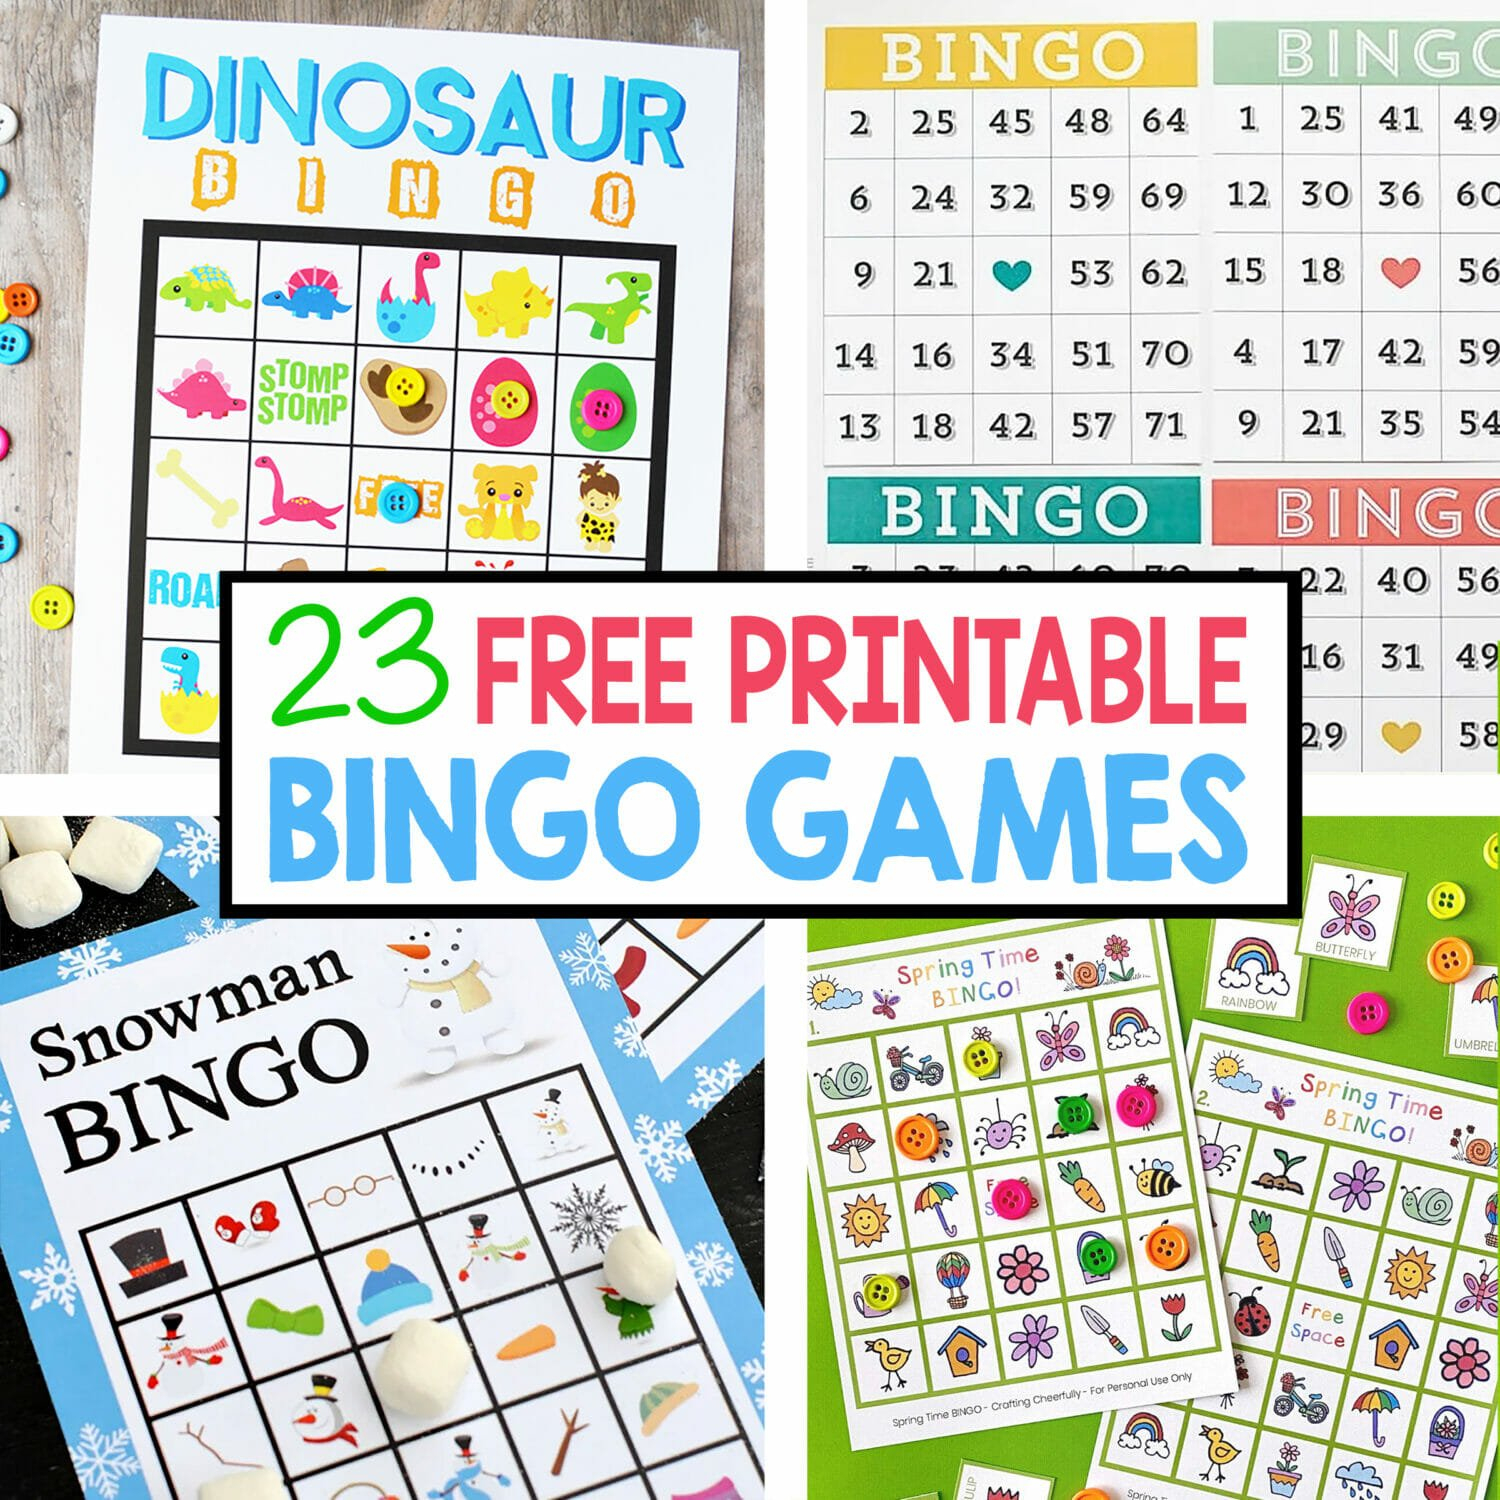 23 Free Printable Bingo Games - Crafting Cheerfully - Free Printable Bingo Game Patterns